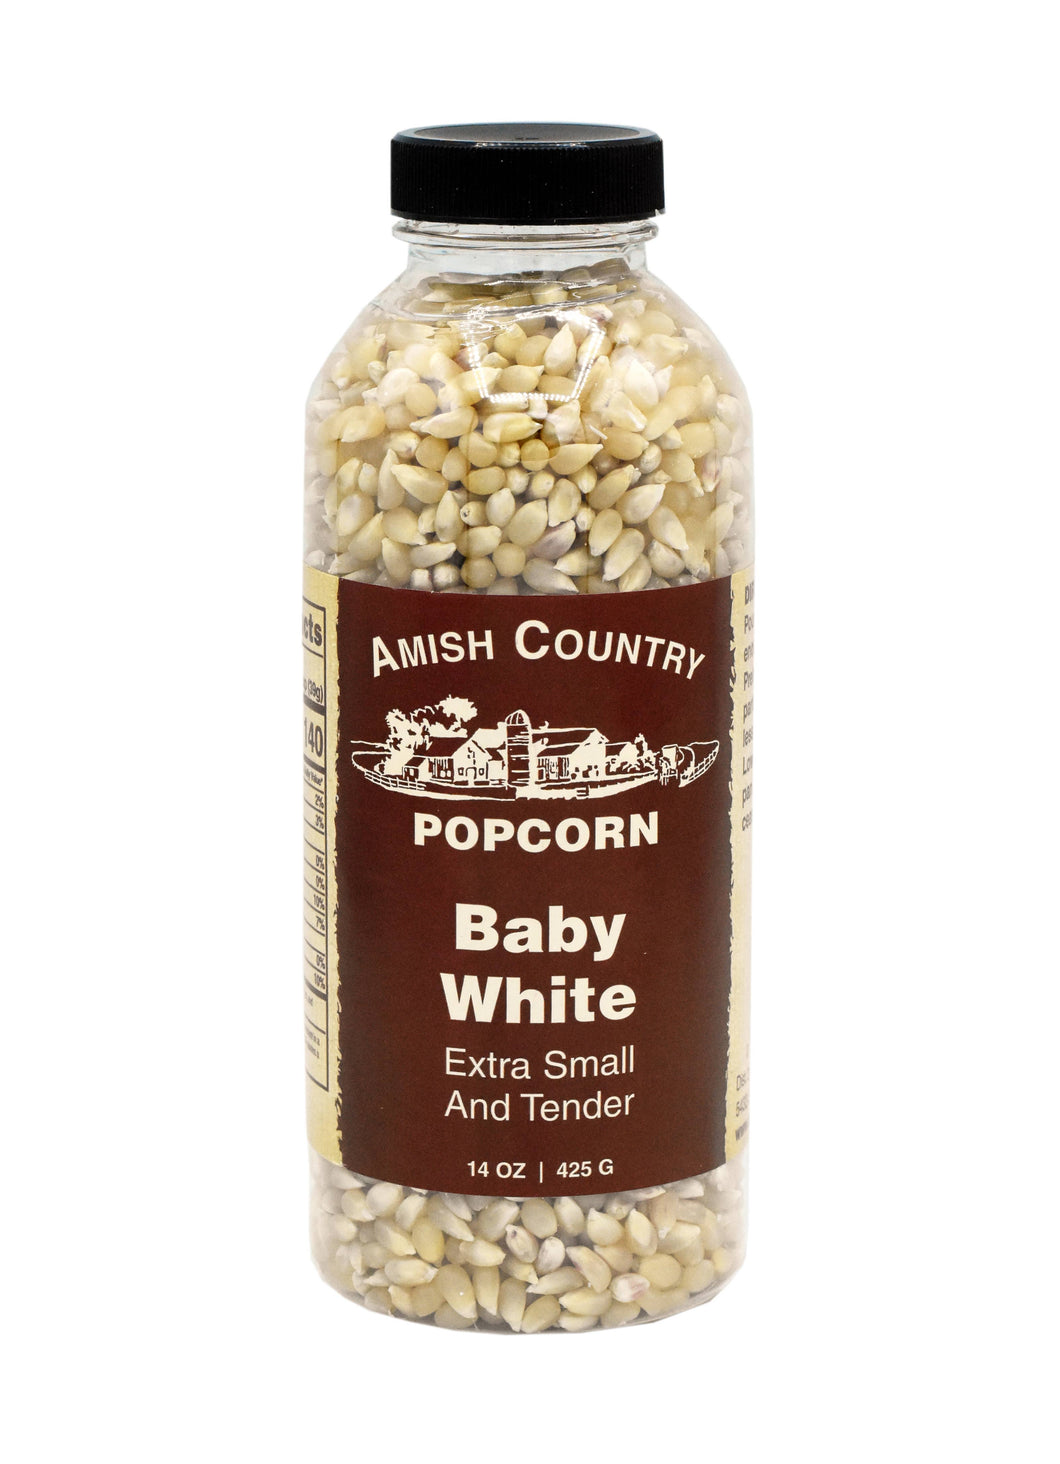 Amish Country Popcorn - 14oz Bottle of Baby White Popcorn